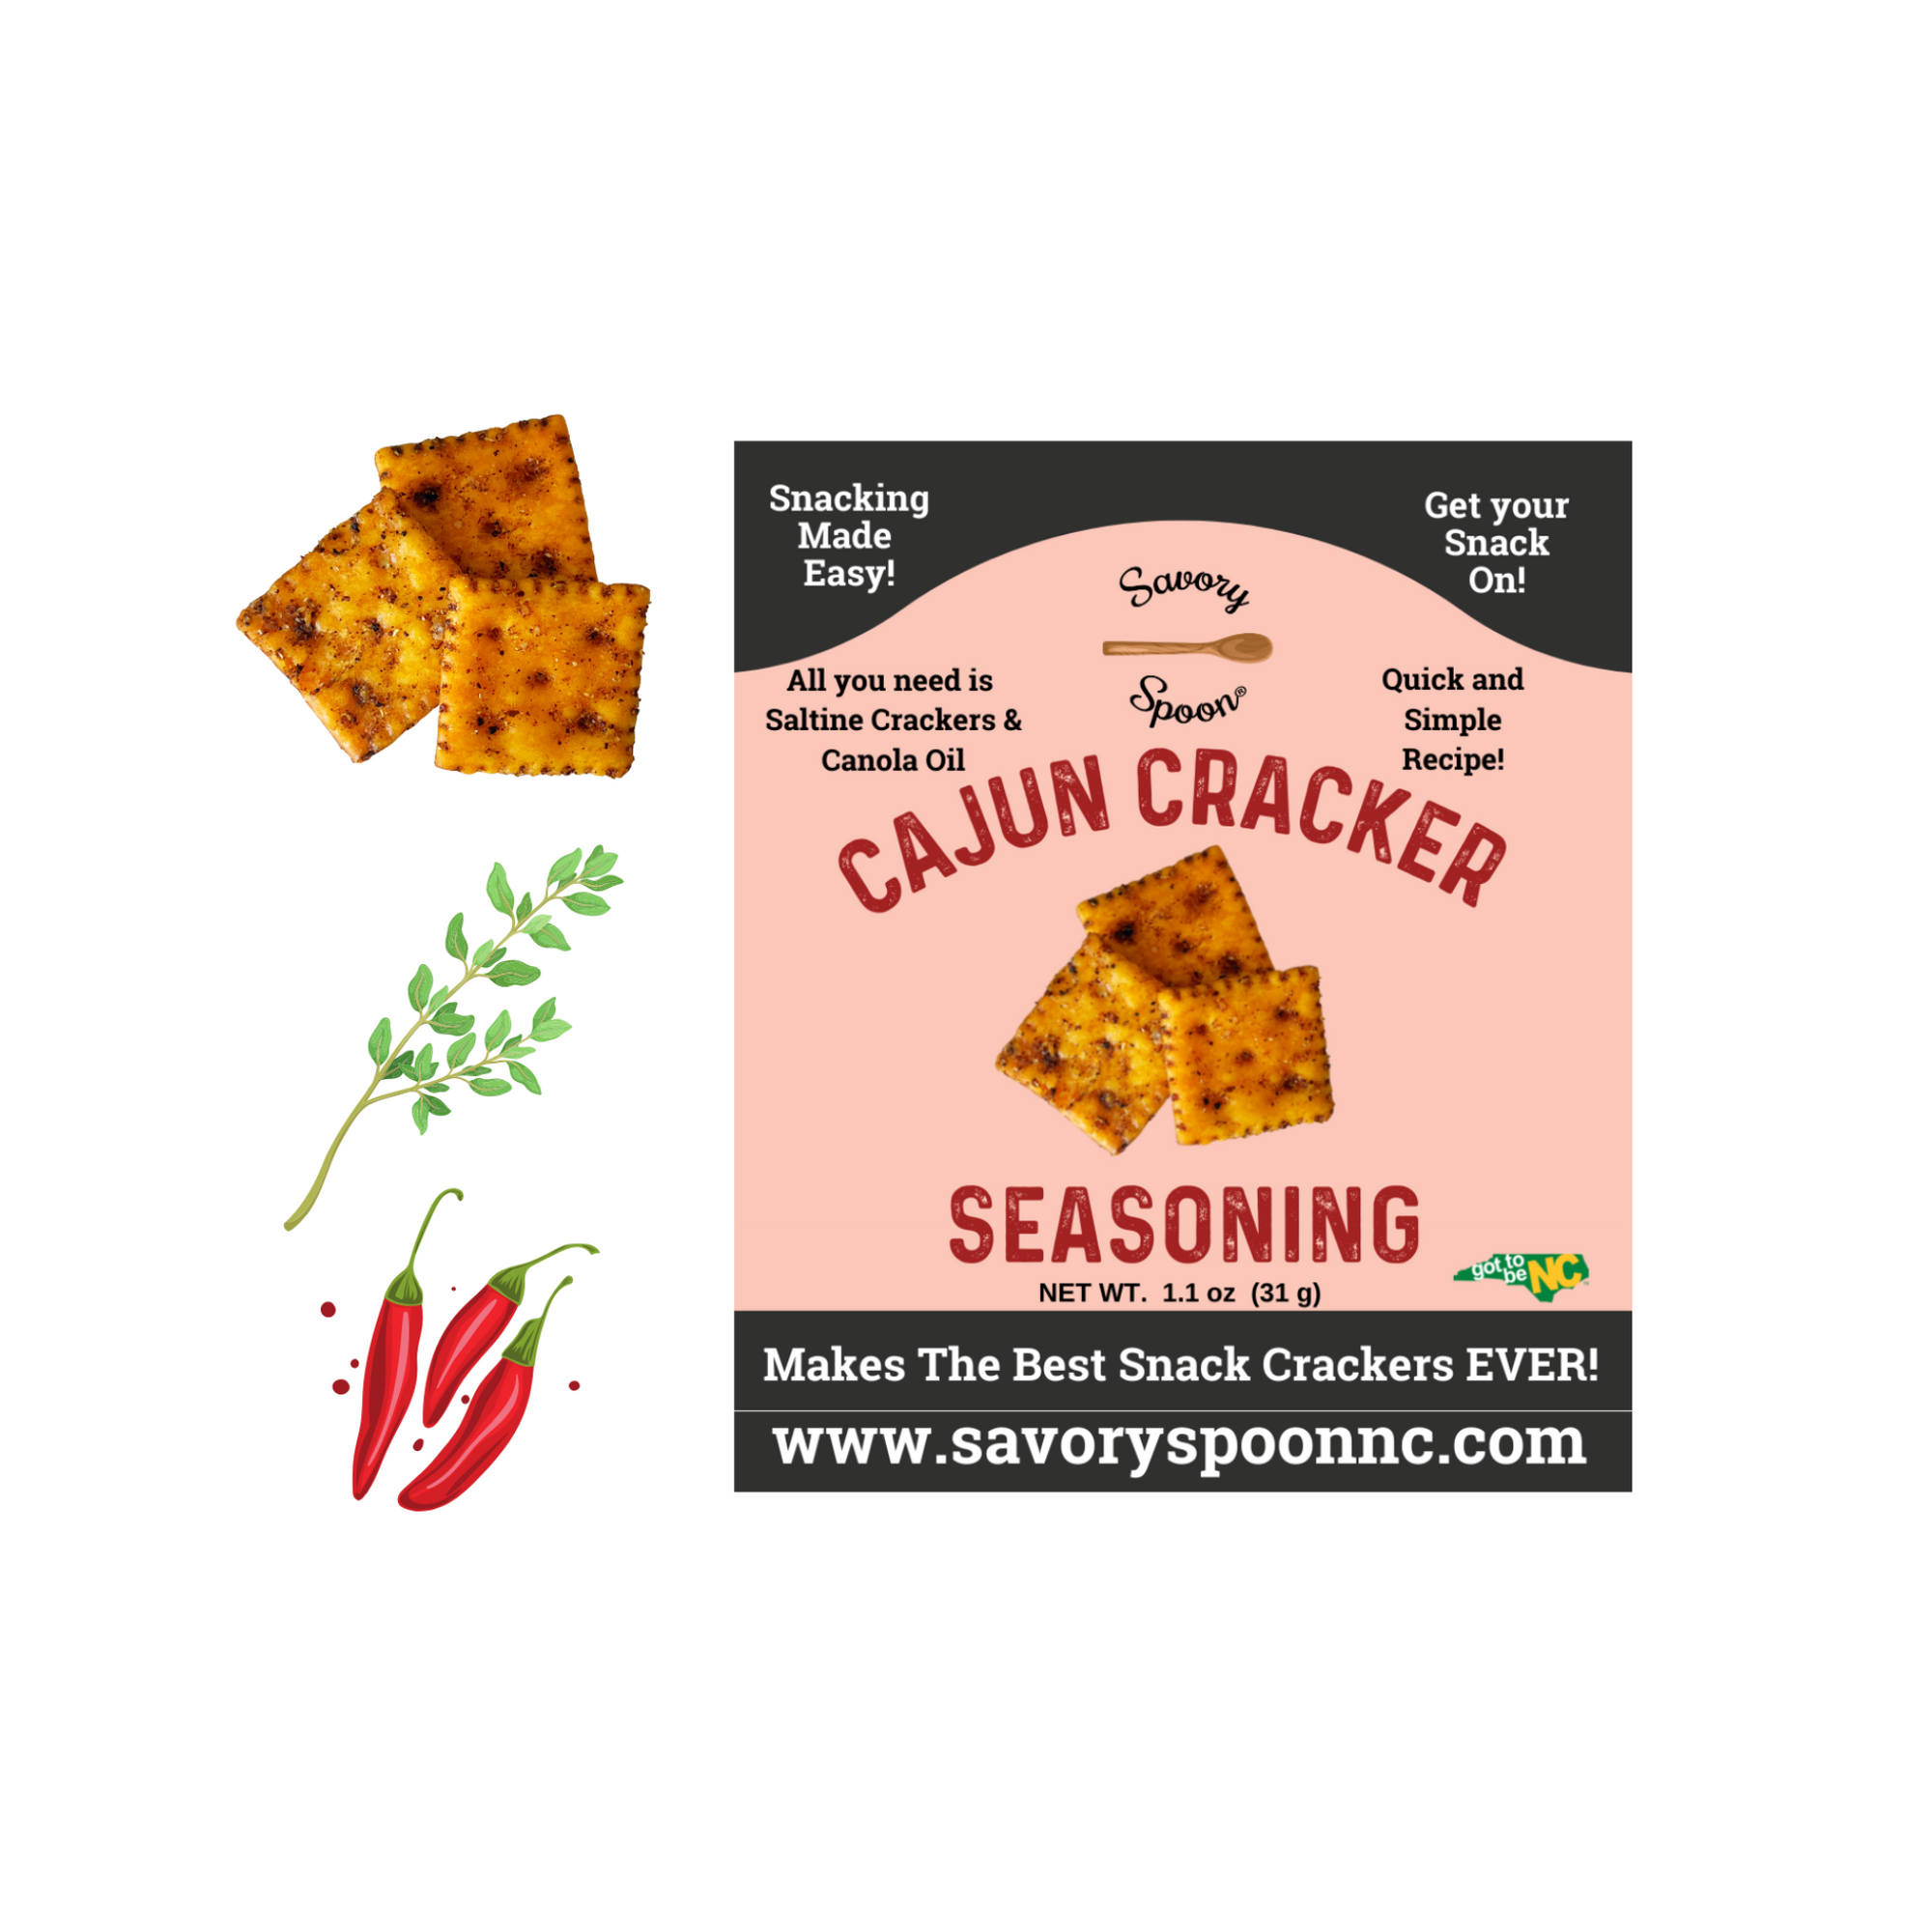 Cajun Cracker Seasoning